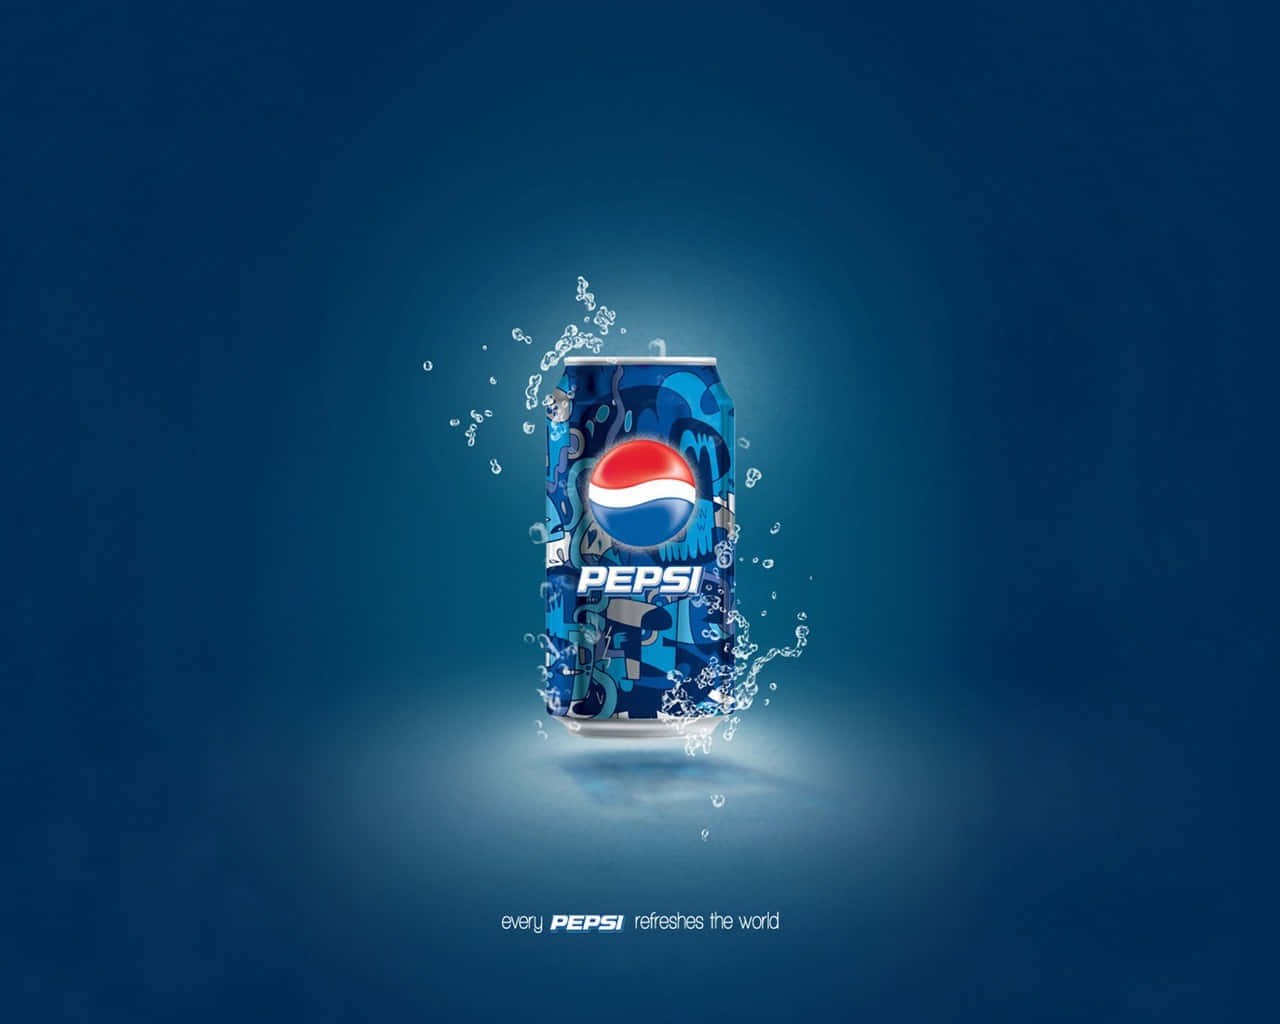 Every Pepsi Ad Wallpaper